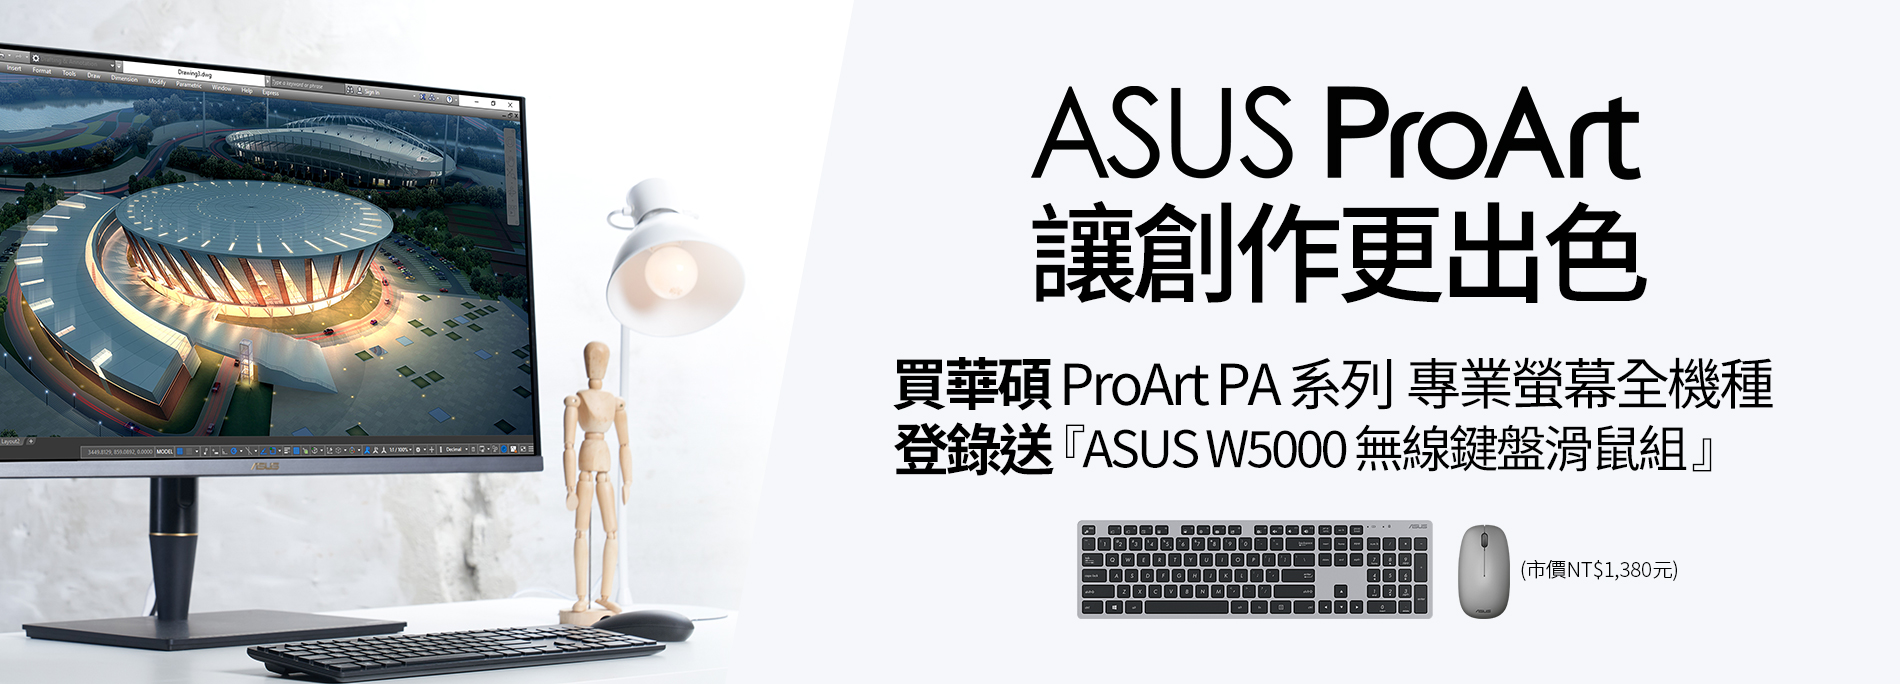 【ASUS ProArt 讓創作更出色】活動期間購買華碩 ProArt PA 系列專業螢幕全機種，官網登錄送『ASUS W5000 無線鍵盤滑鼠組』(市價NT$1,380元，顏色隨機出貨)